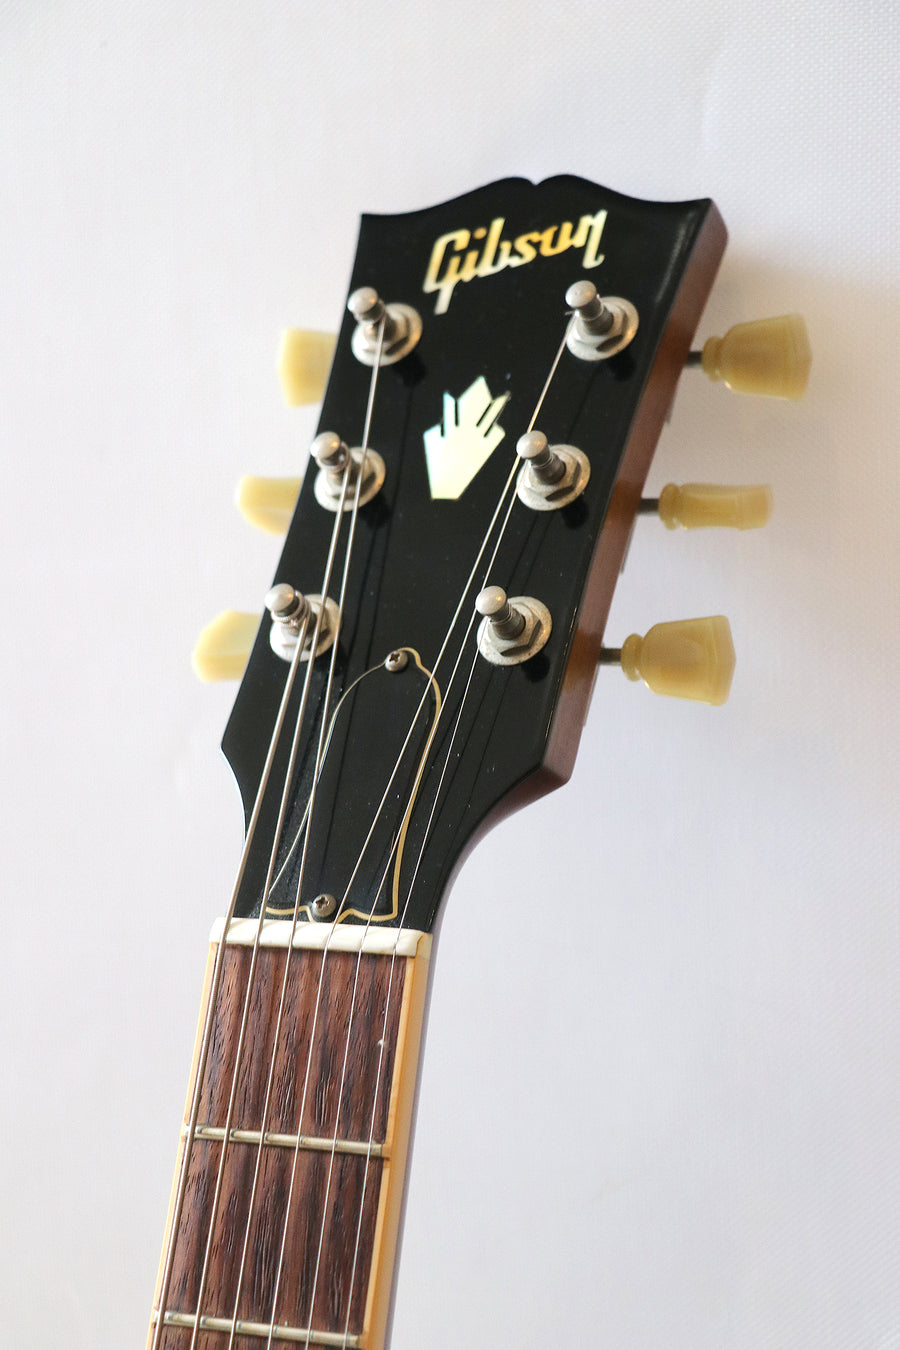 Gibson ES-339 Custom Shop 2010